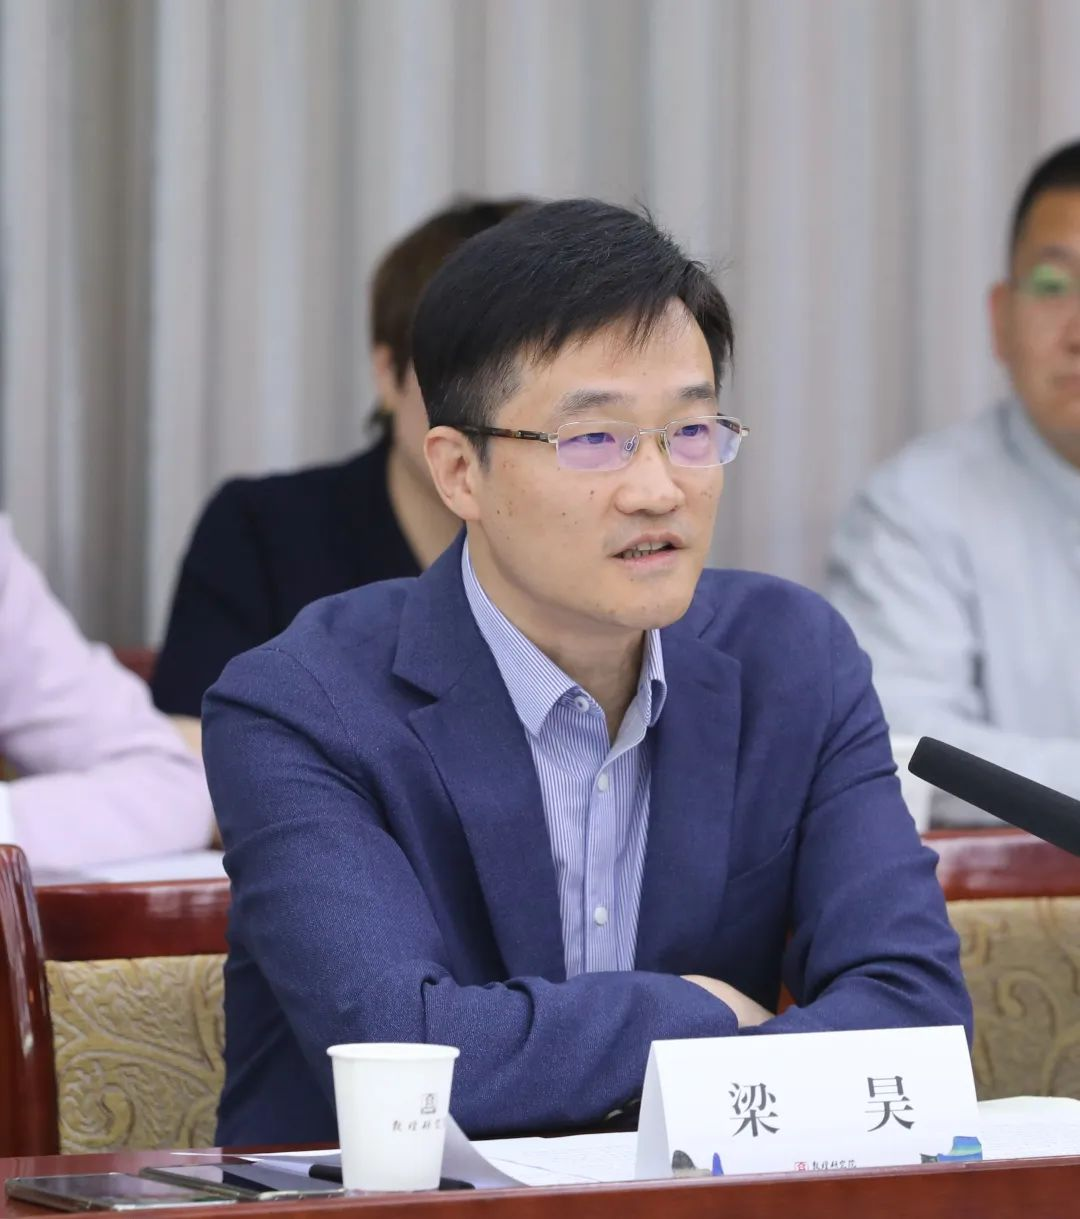 Adentrándose en Dunhuang |Reunión de promoción de la convocatoria de casos prácticos celebrada en el Instituto de Investigación de Dunhuang_fororder_LL